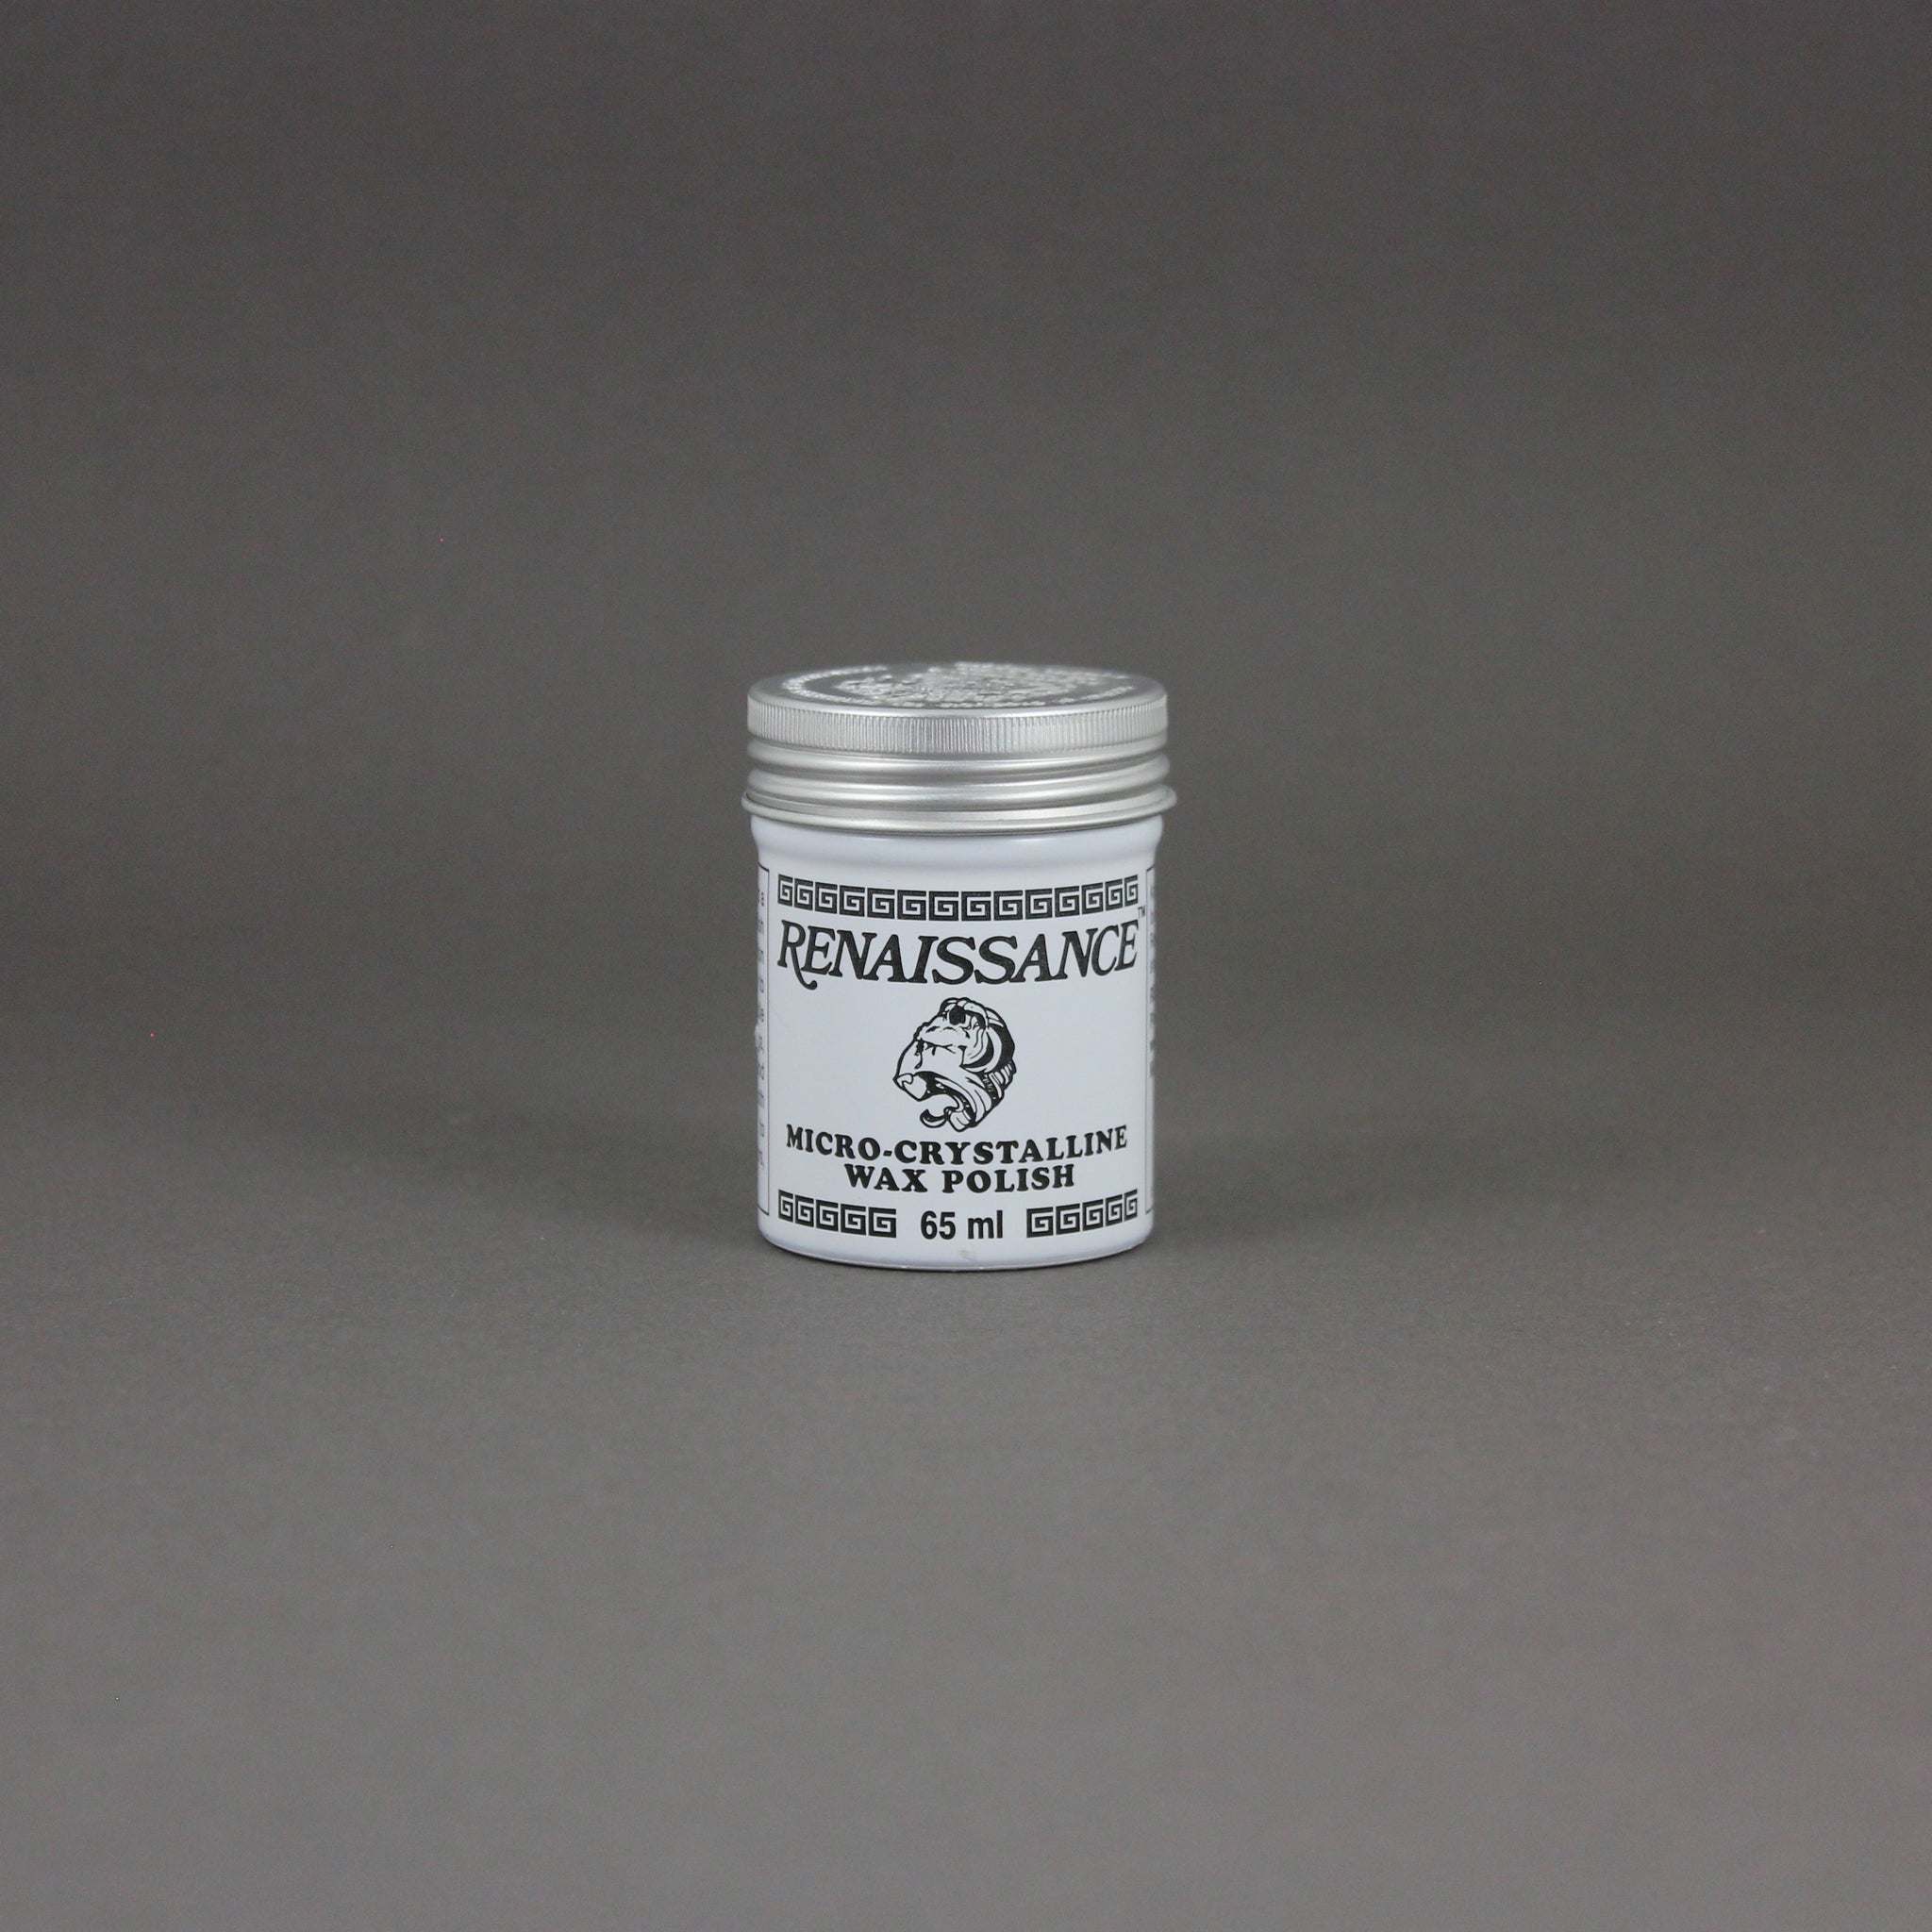 Renaissance Micro-Crystalline Wax Polish (65 ml)